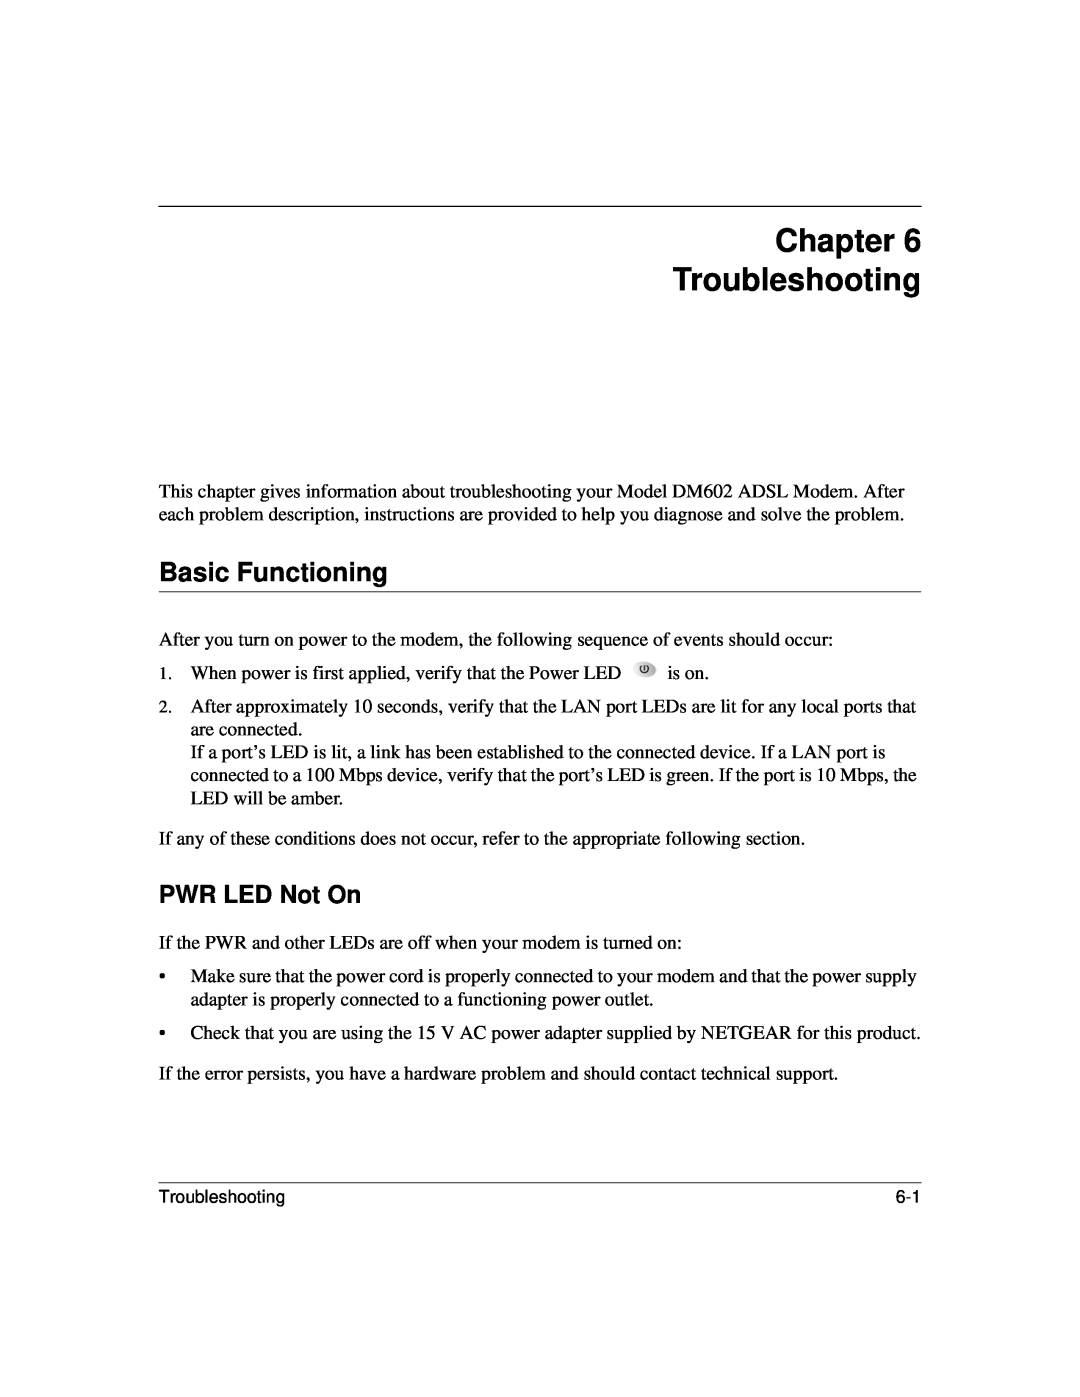 NETGEAR DM602 manual Chapter Troubleshooting, Basic Functioning, PWR LED Not On 